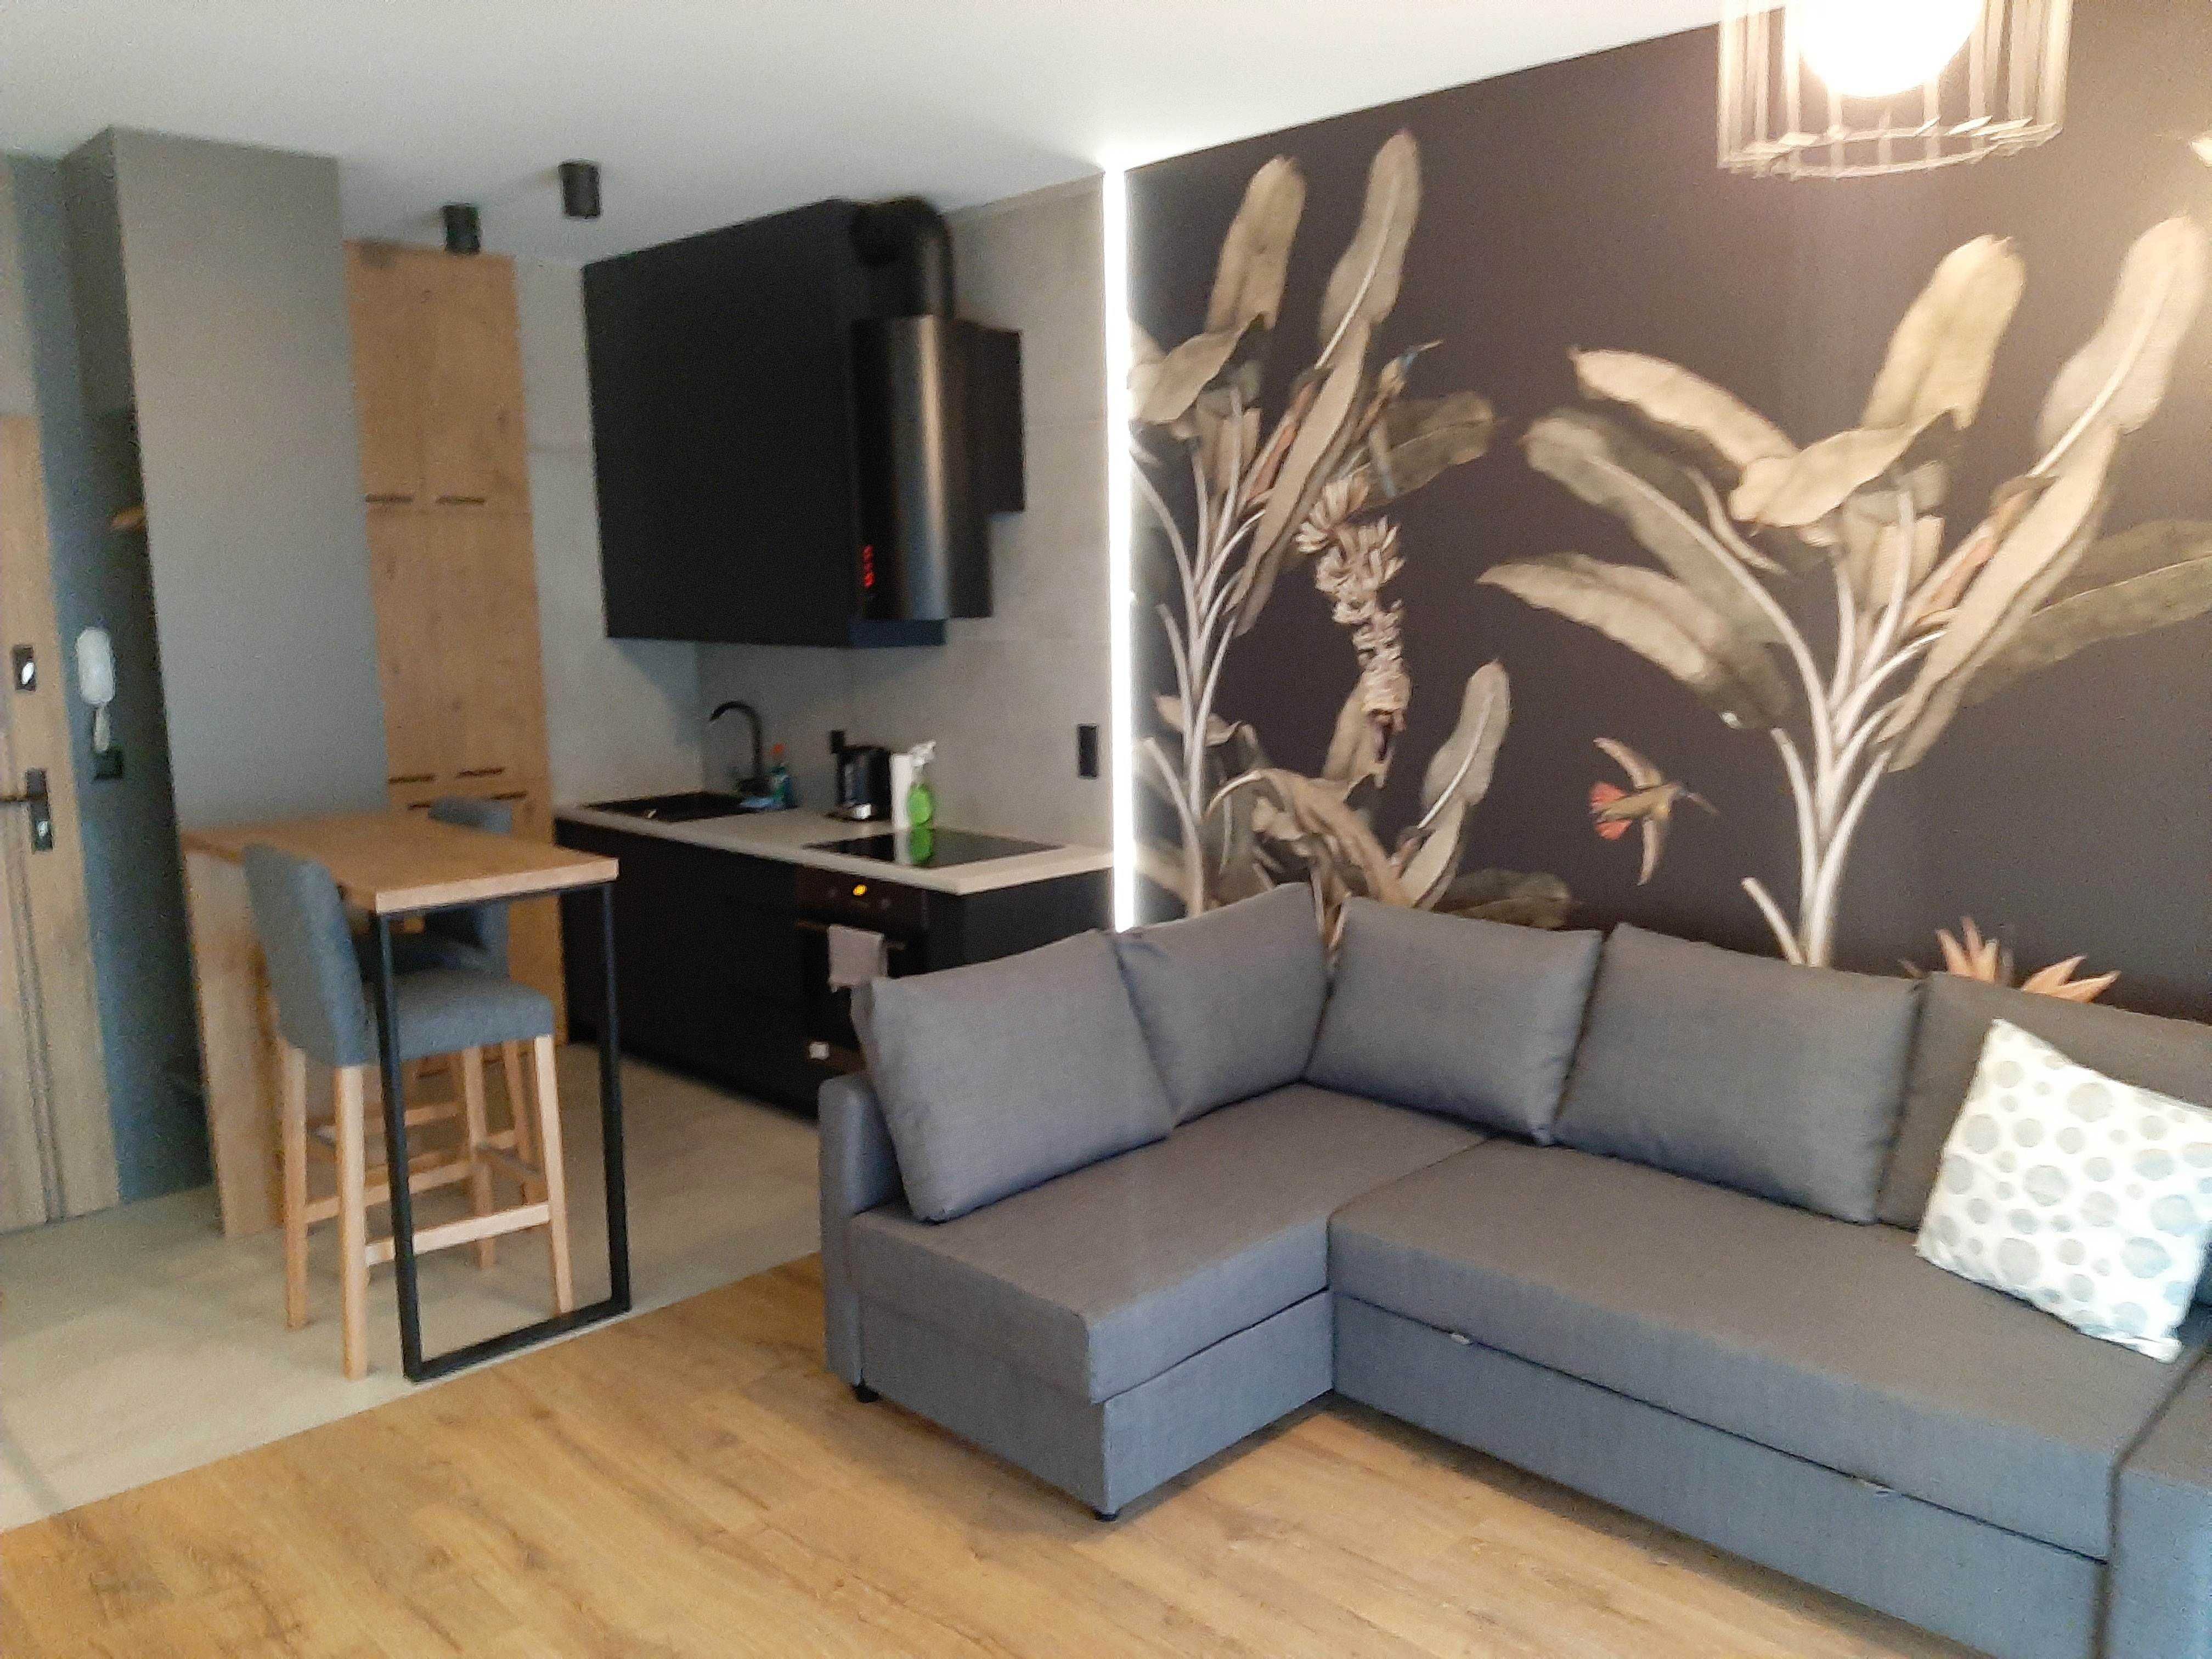 Jacuzzi i sauna apartament  "Deluxe" Gdańsk – RELAX Apartments